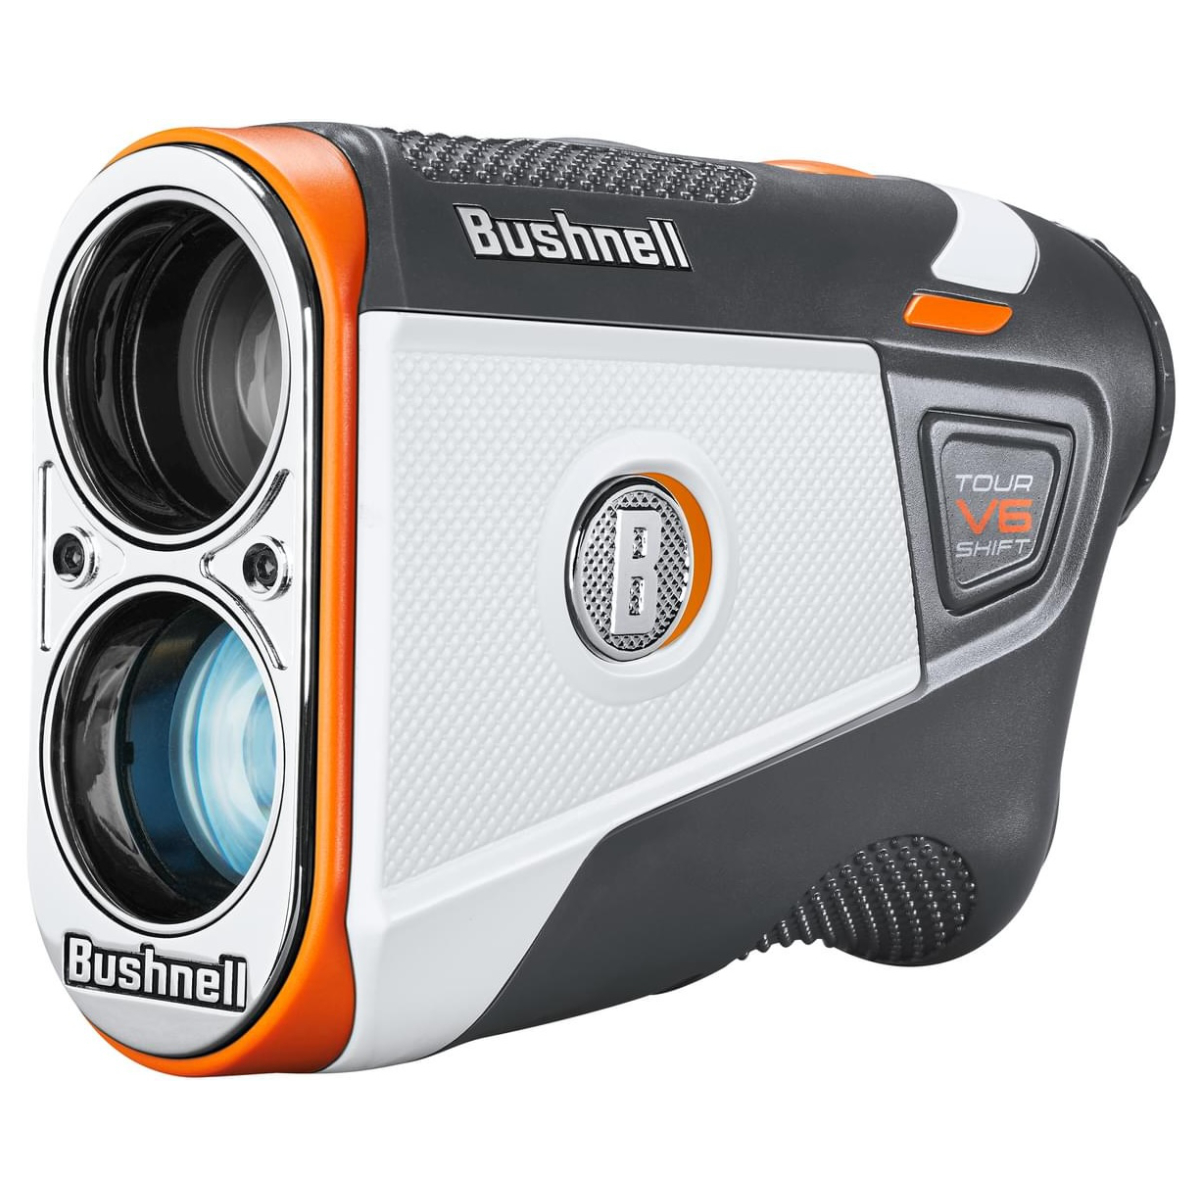 Bushnell Laser Tour V6 Shift White/Orange